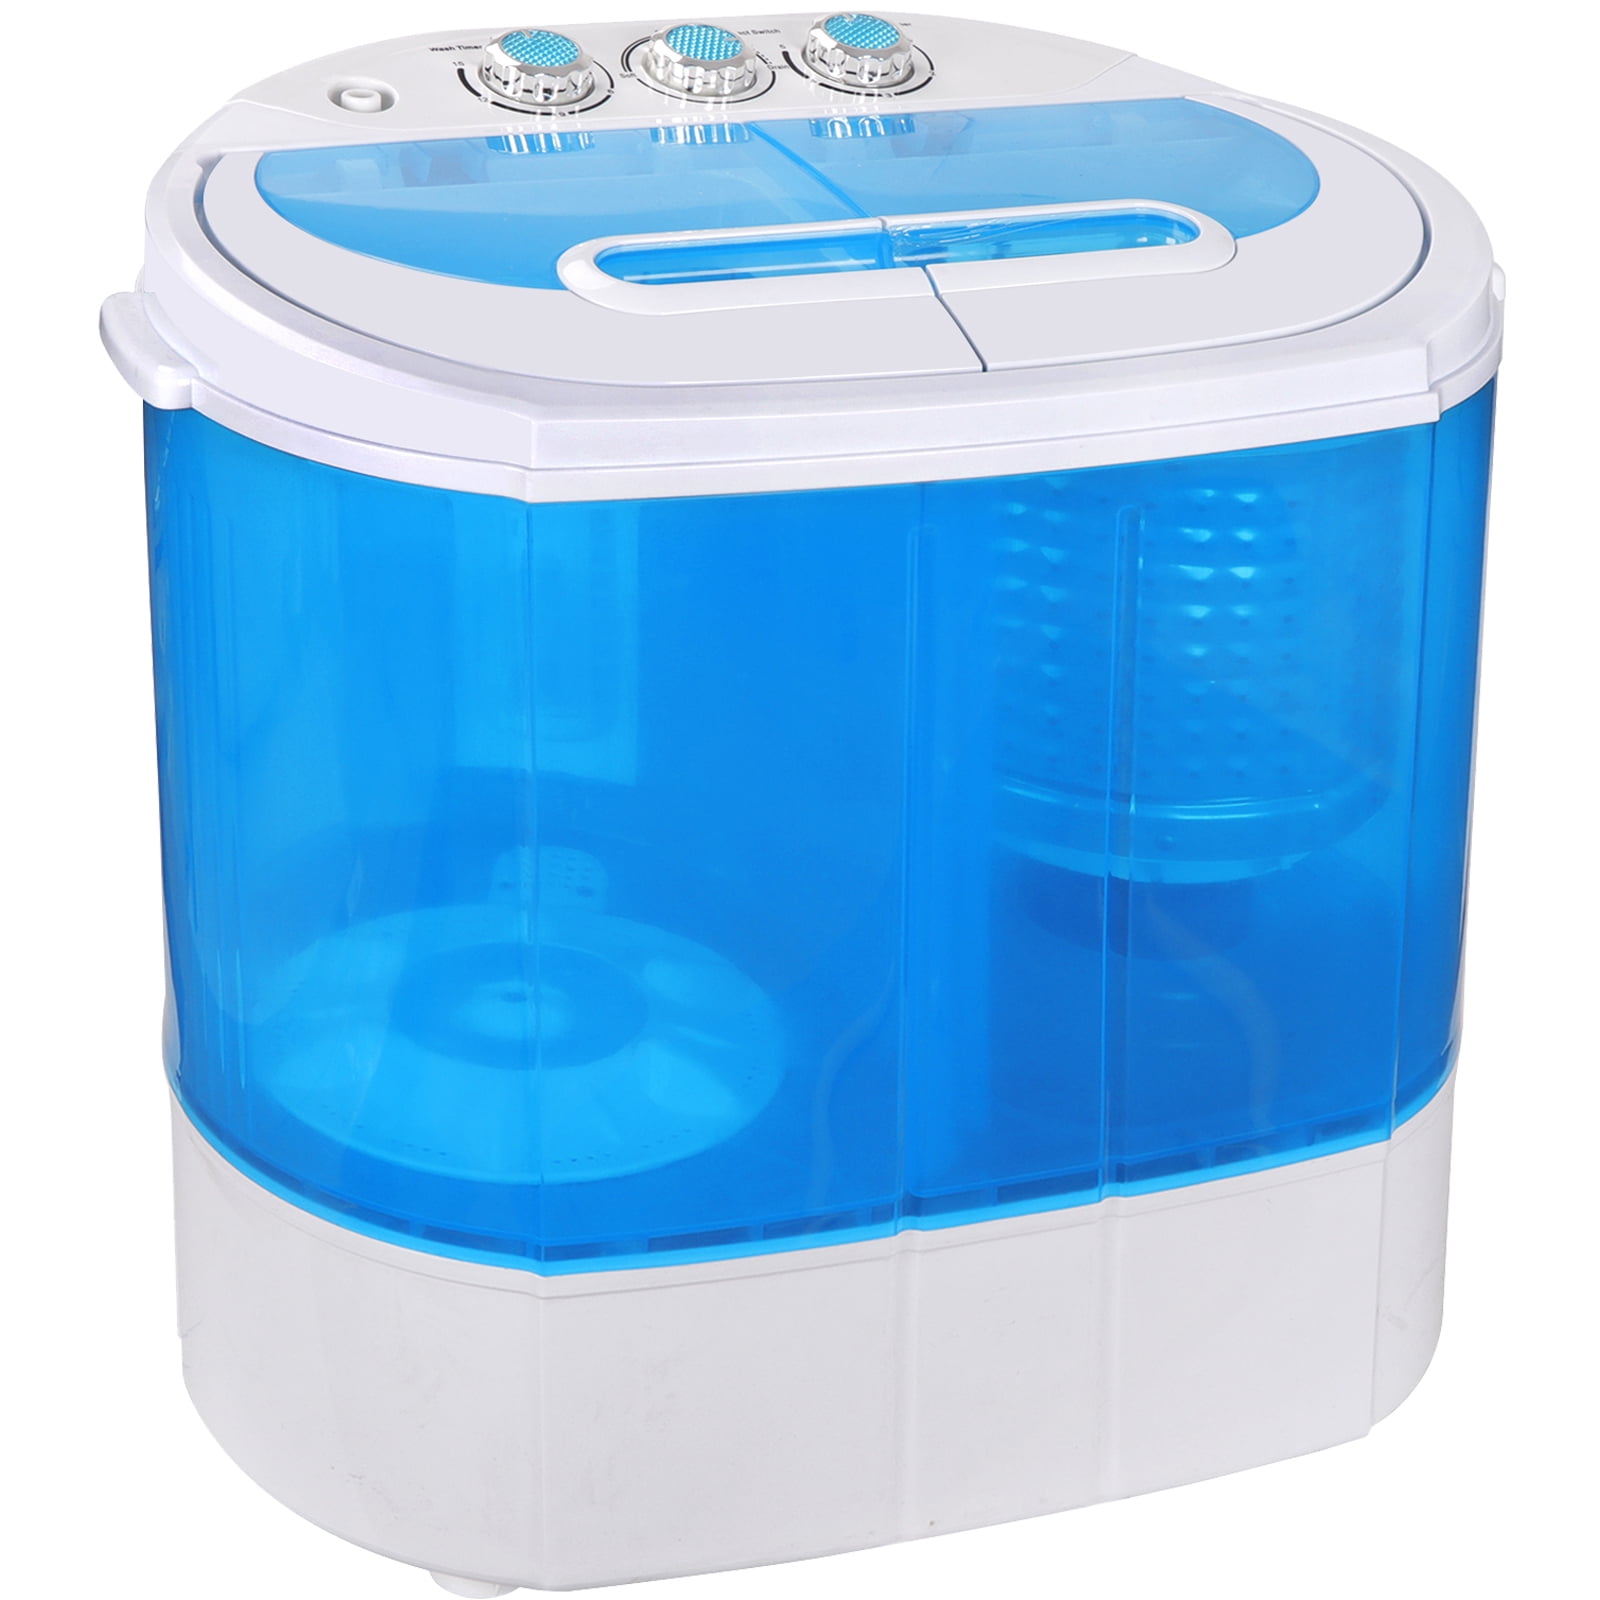 Intexca US Portable Twin Tub Mini Washing Machine w/ Spin and Dryer Fu